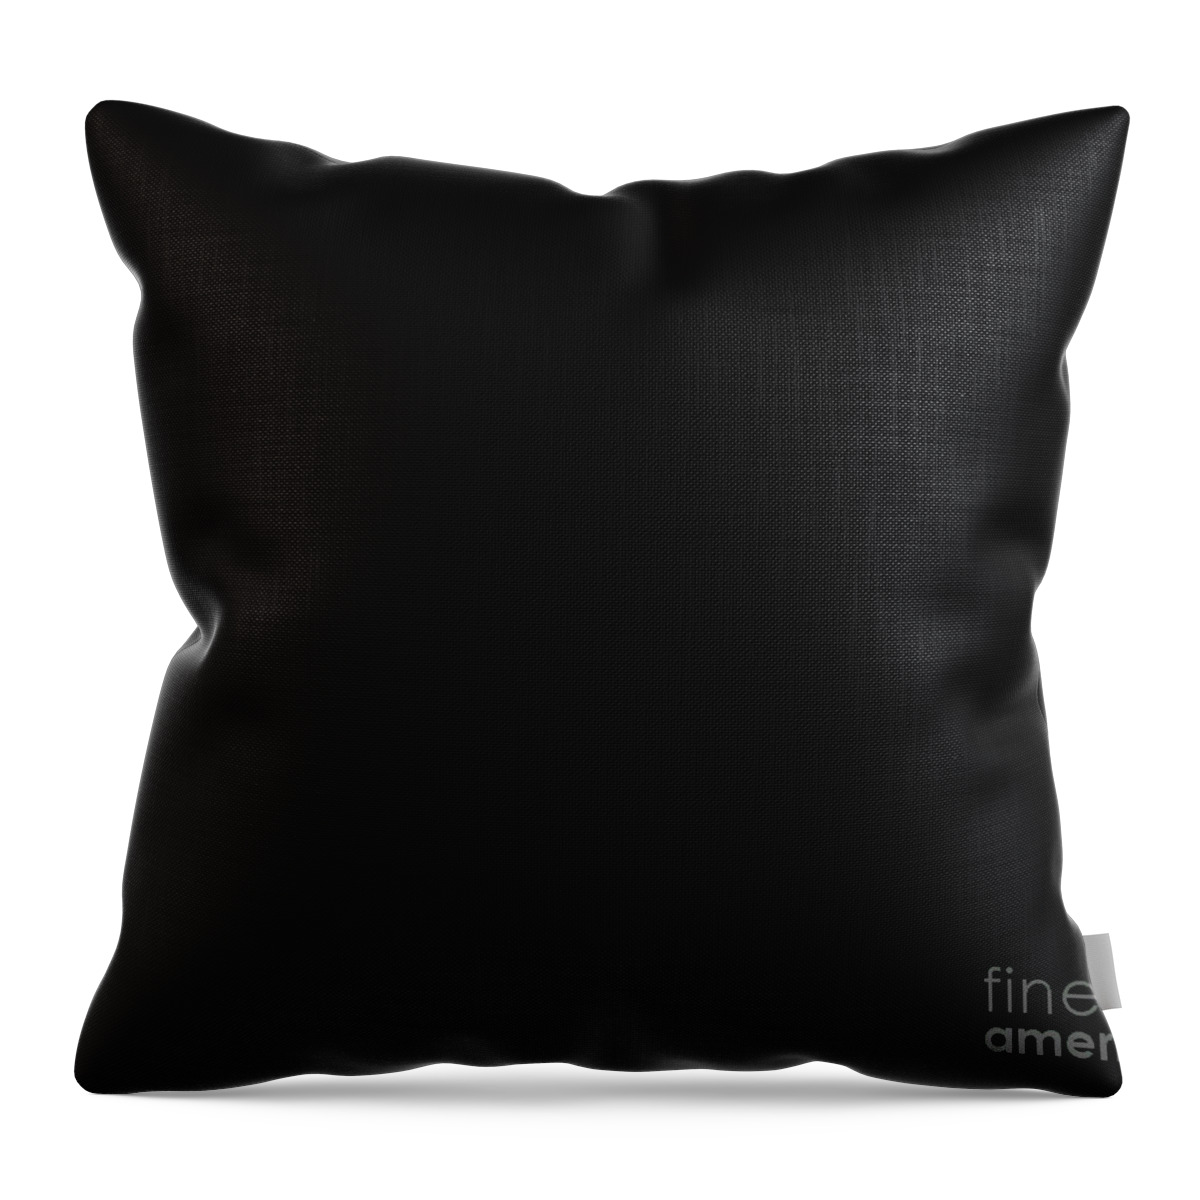 Black Throw Pillow featuring the digital art Black by Pauli Hyvonen